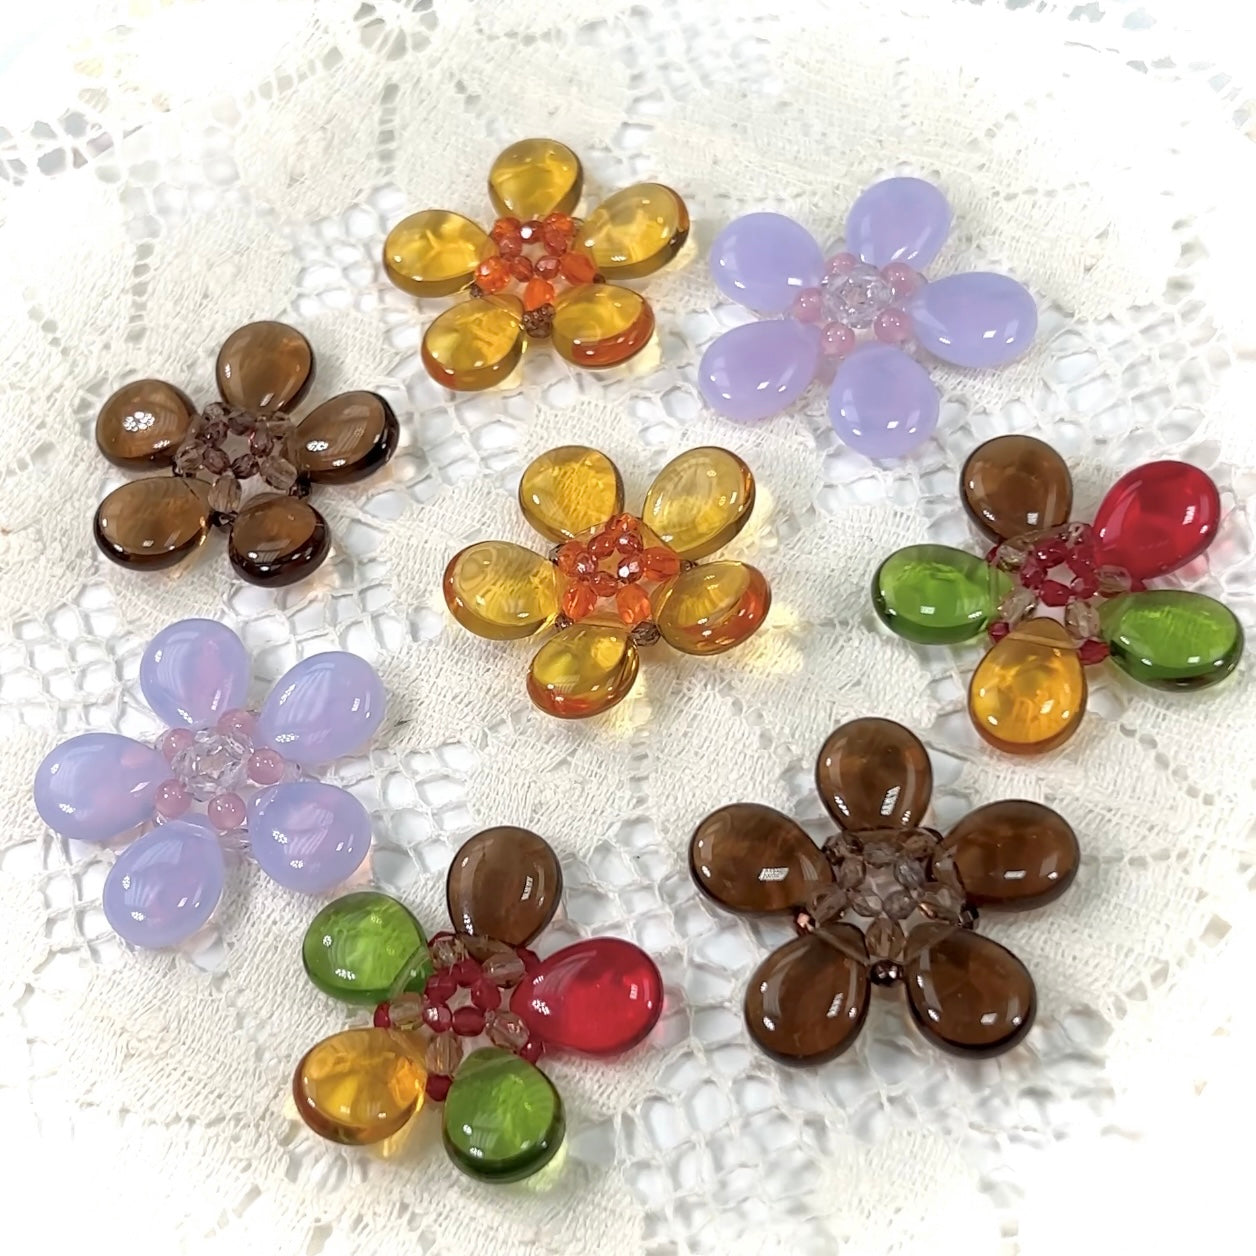 Czech Glass Beads 1.5 inch Flower Ornament Topaz Light Brown and Orange Combination 1 piece CA010